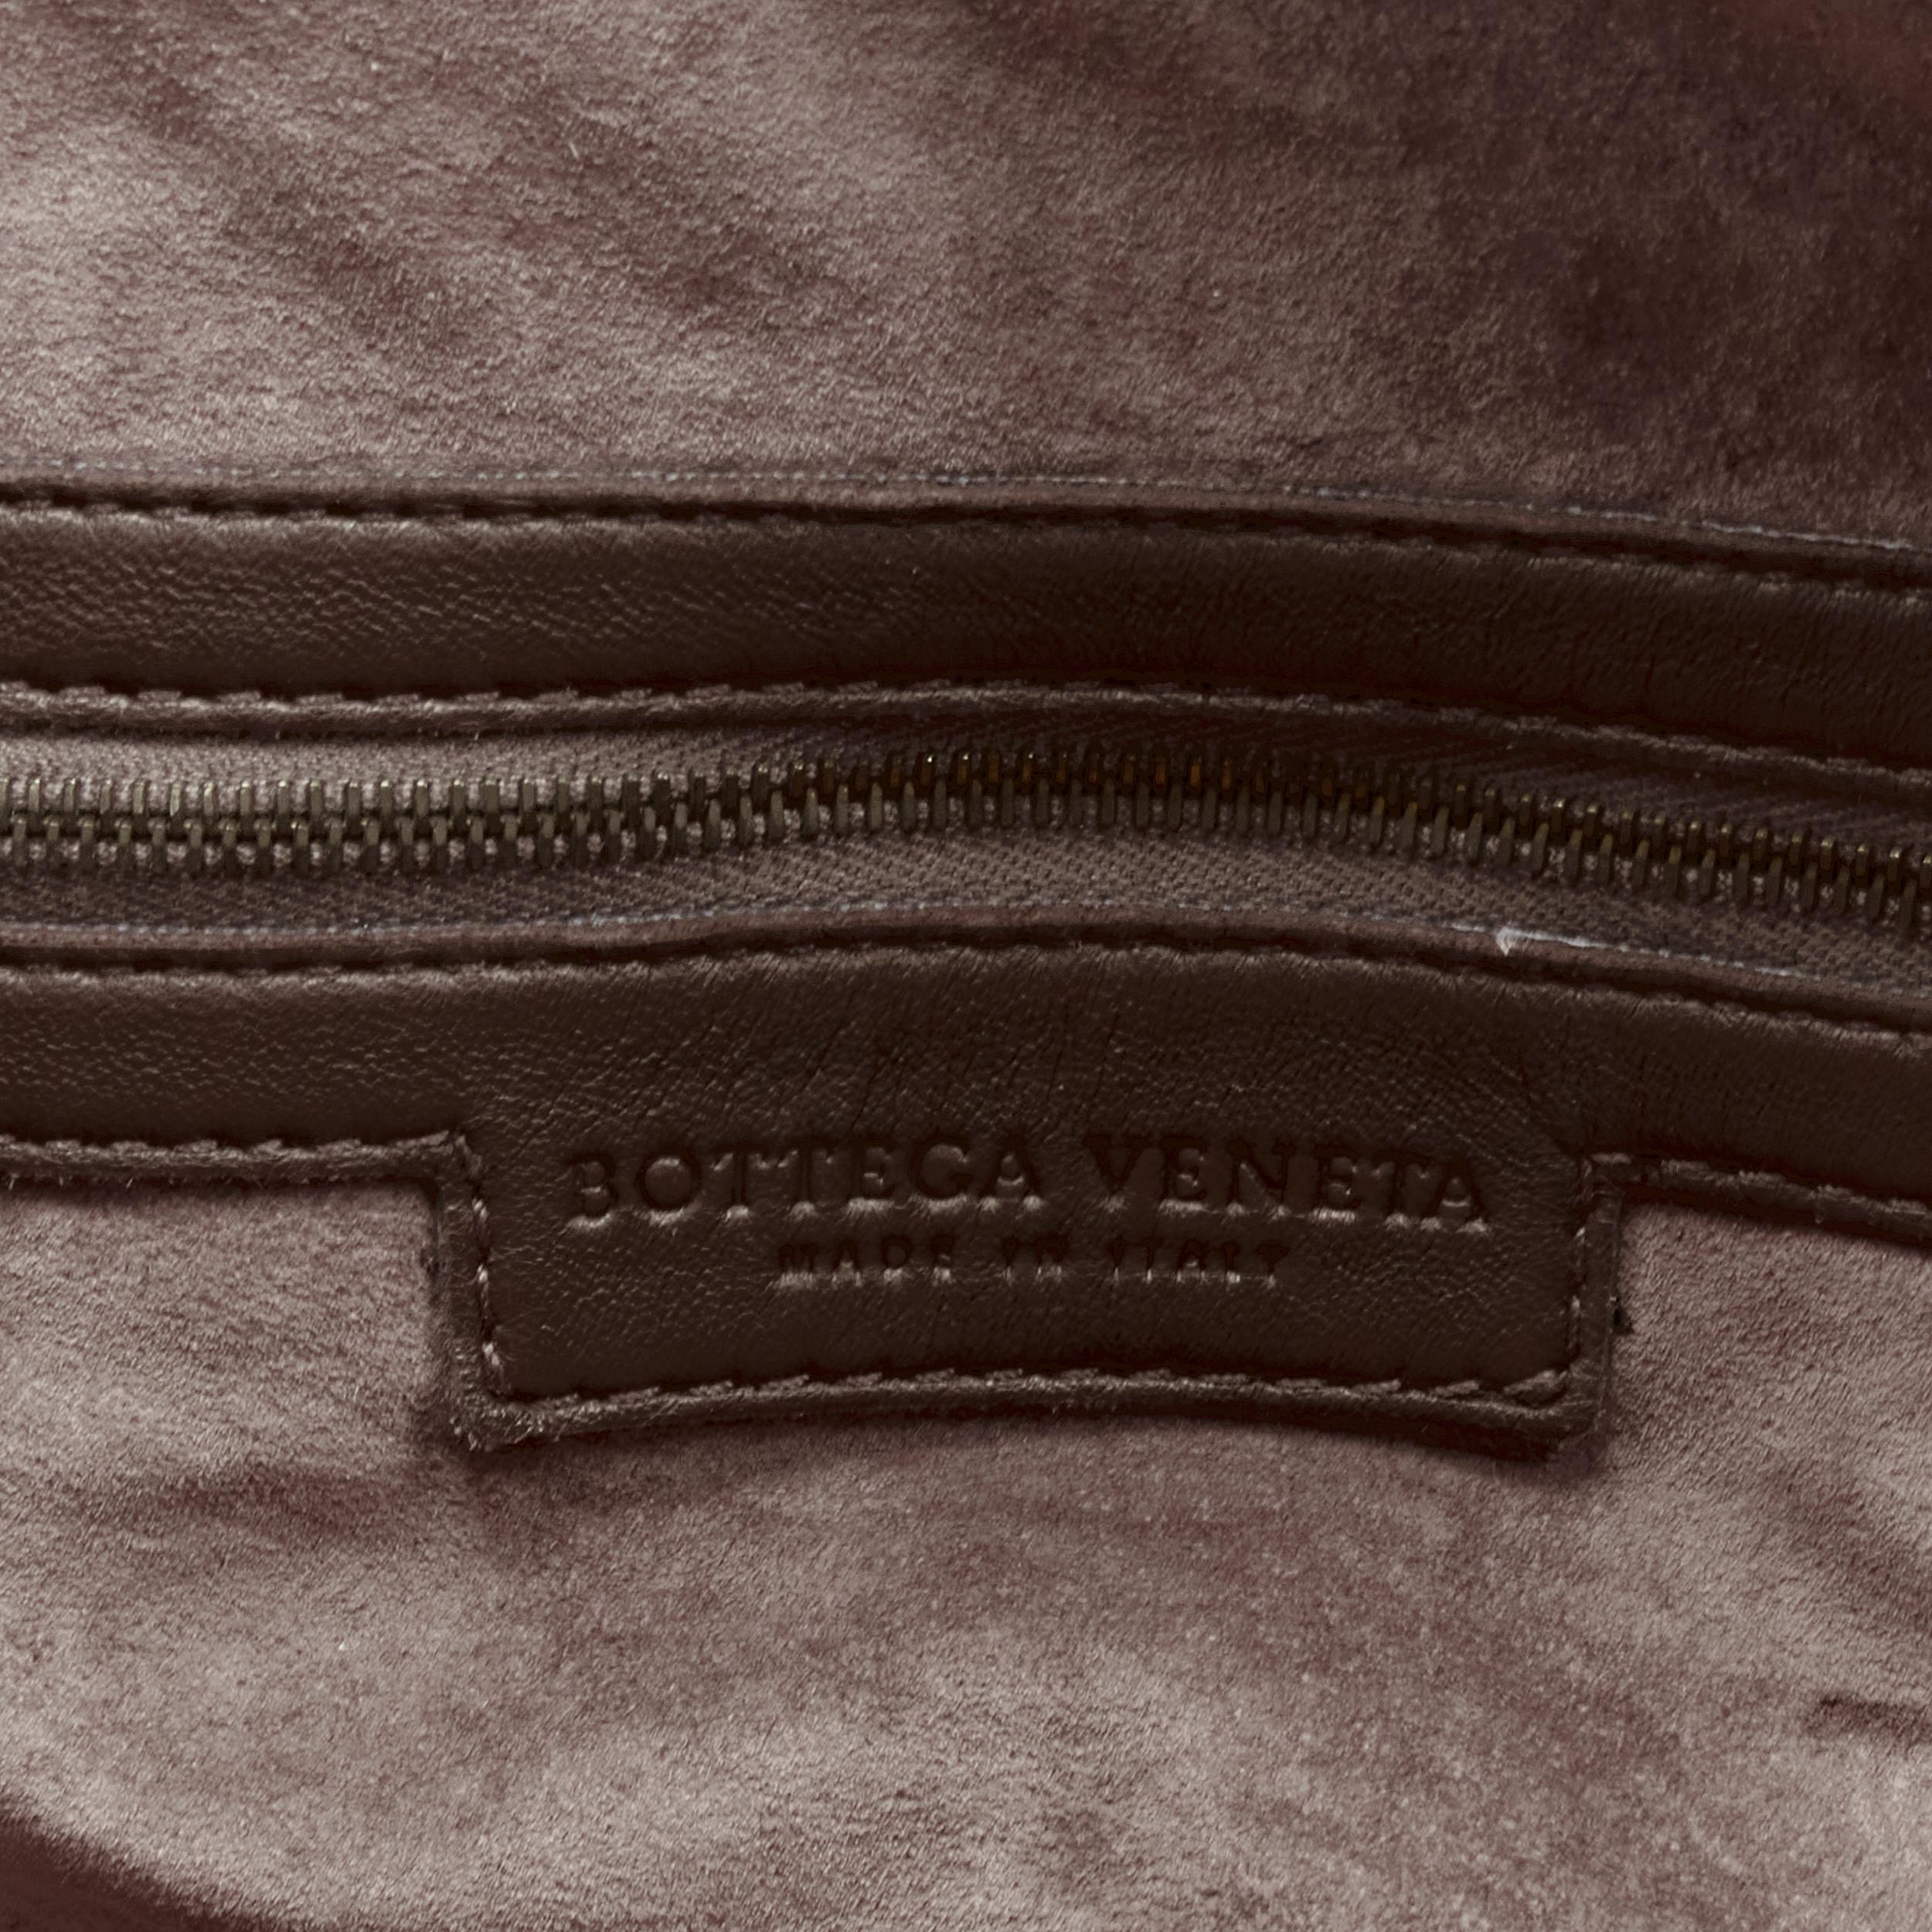 BOTTEGA VENETA Intrecciato brown woven leather pinched side large tote bag 2